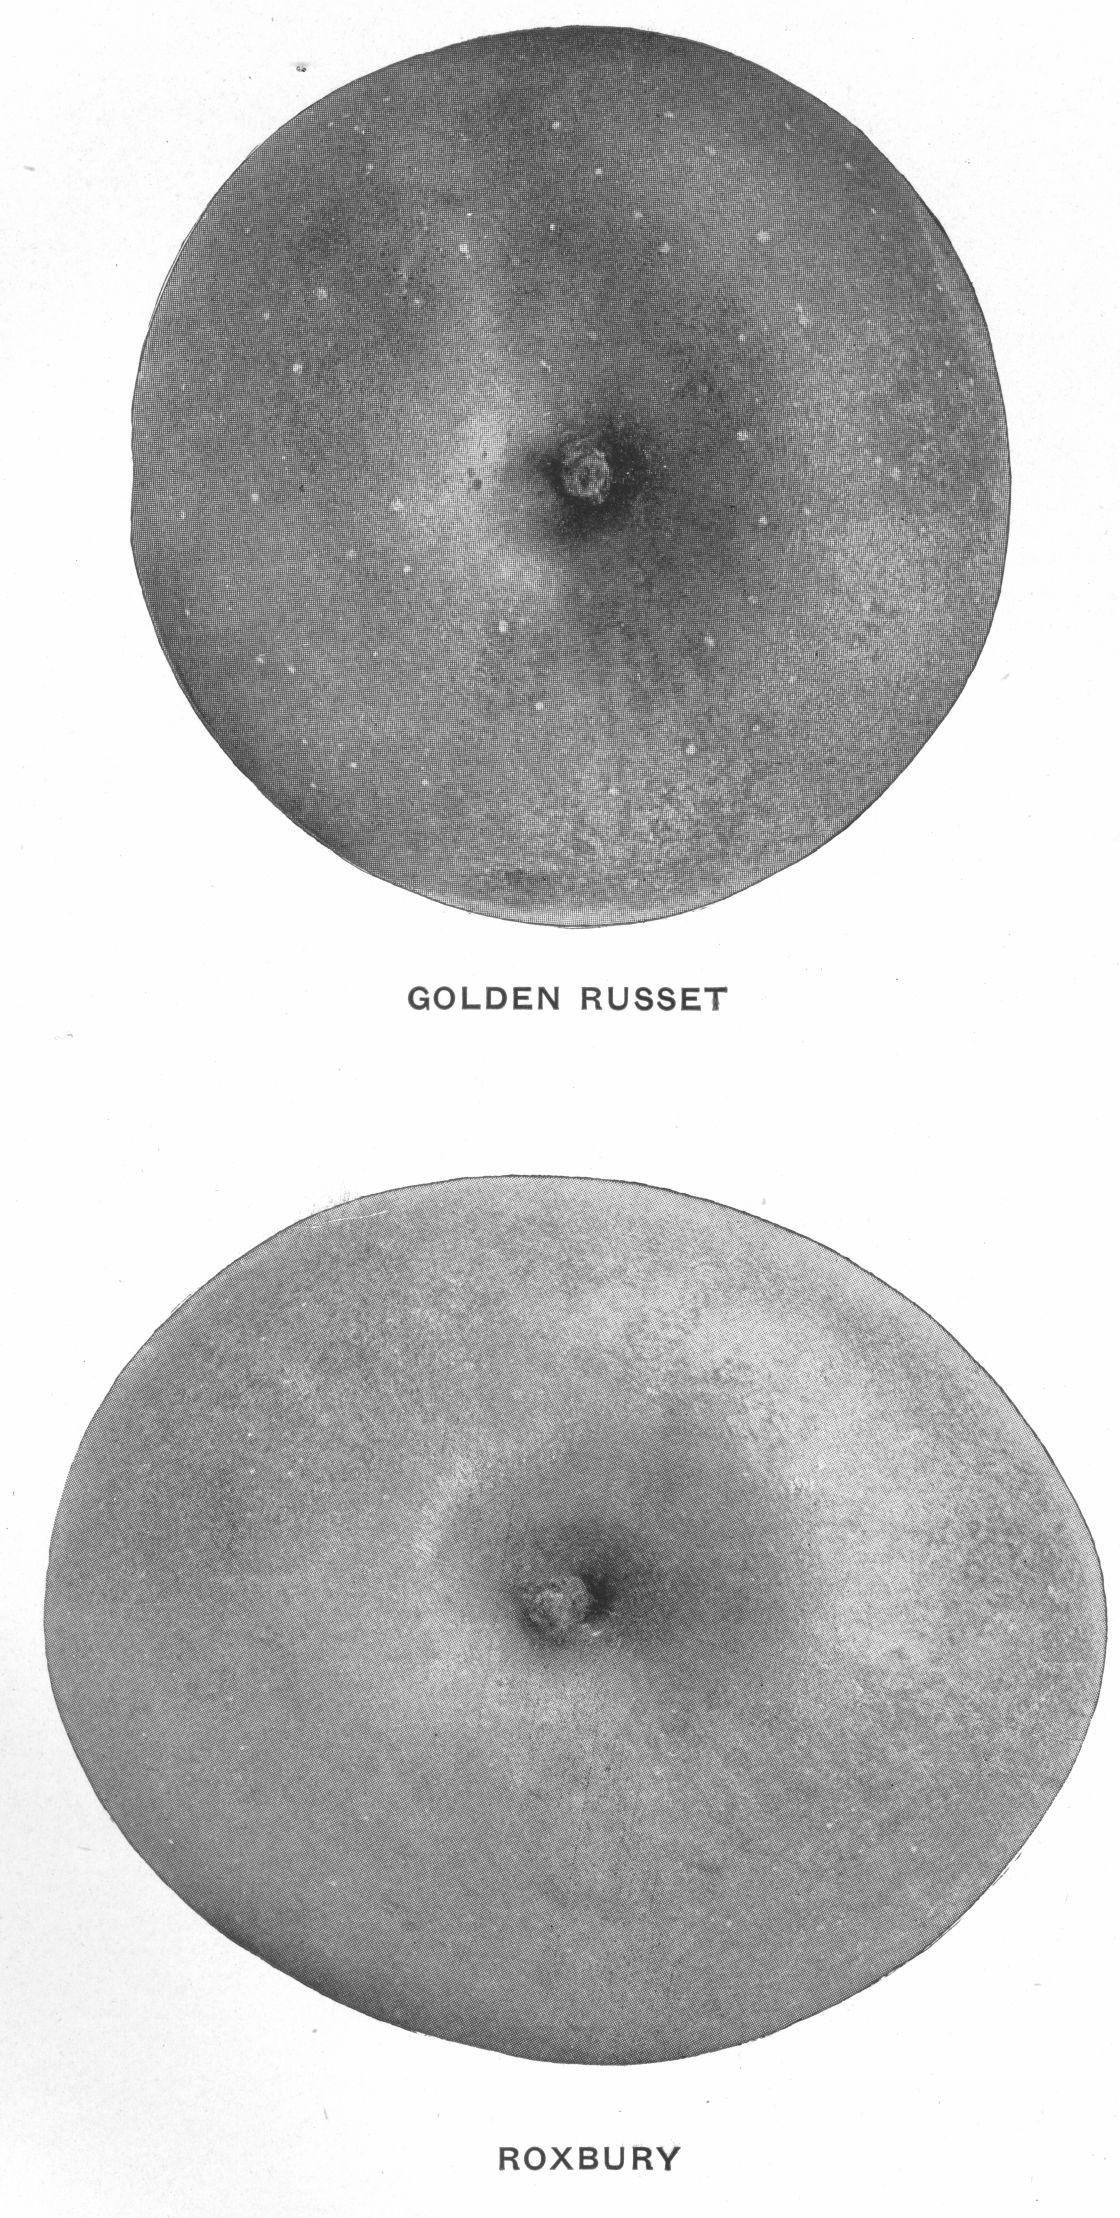 Golden vs Roxbury Russets pic